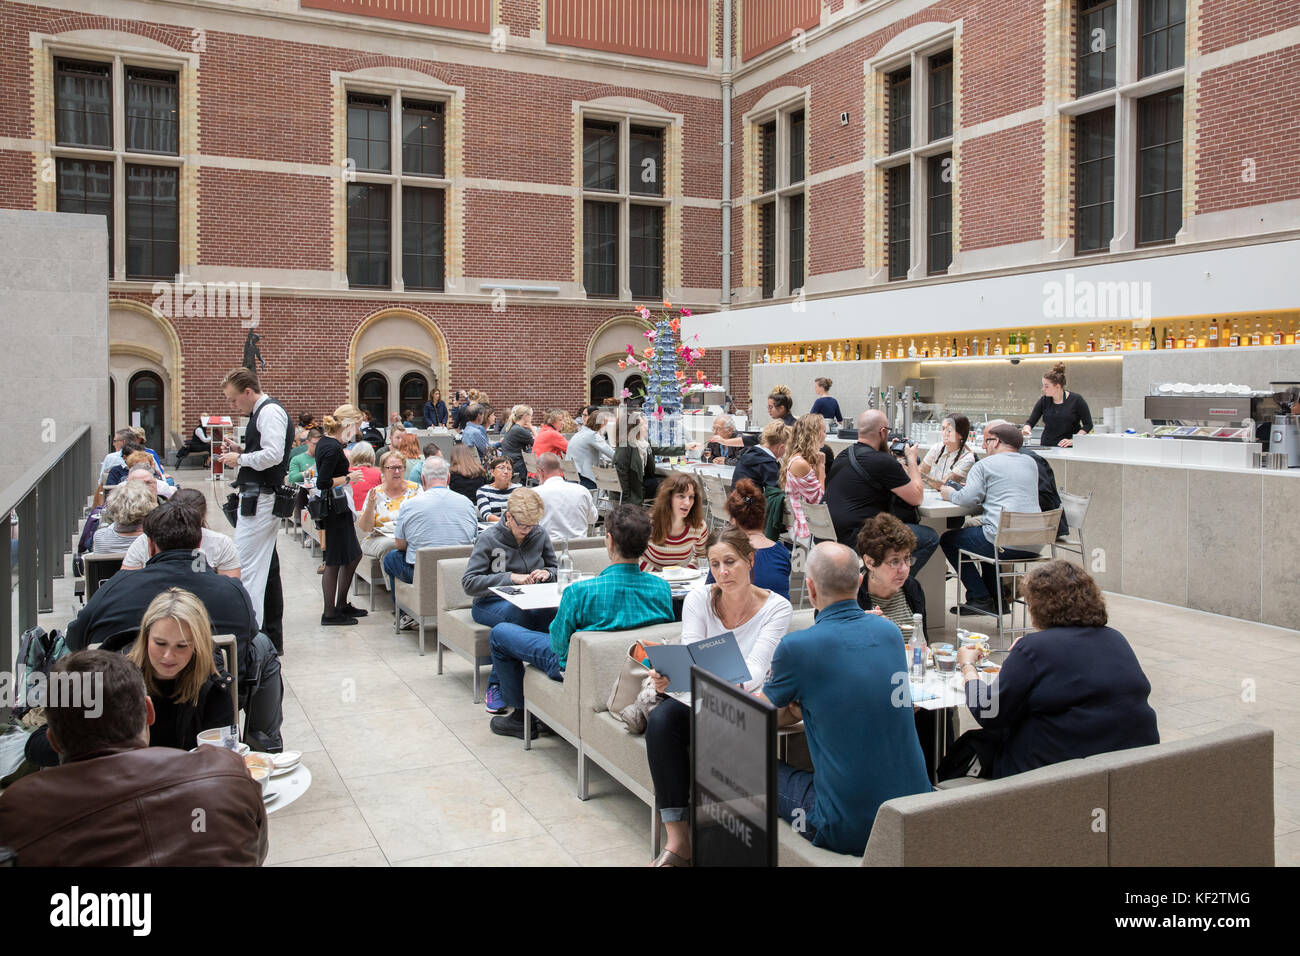 The Rijksmuseum restaurant/cafe in Amsterdam, Netherlands Stock Photo